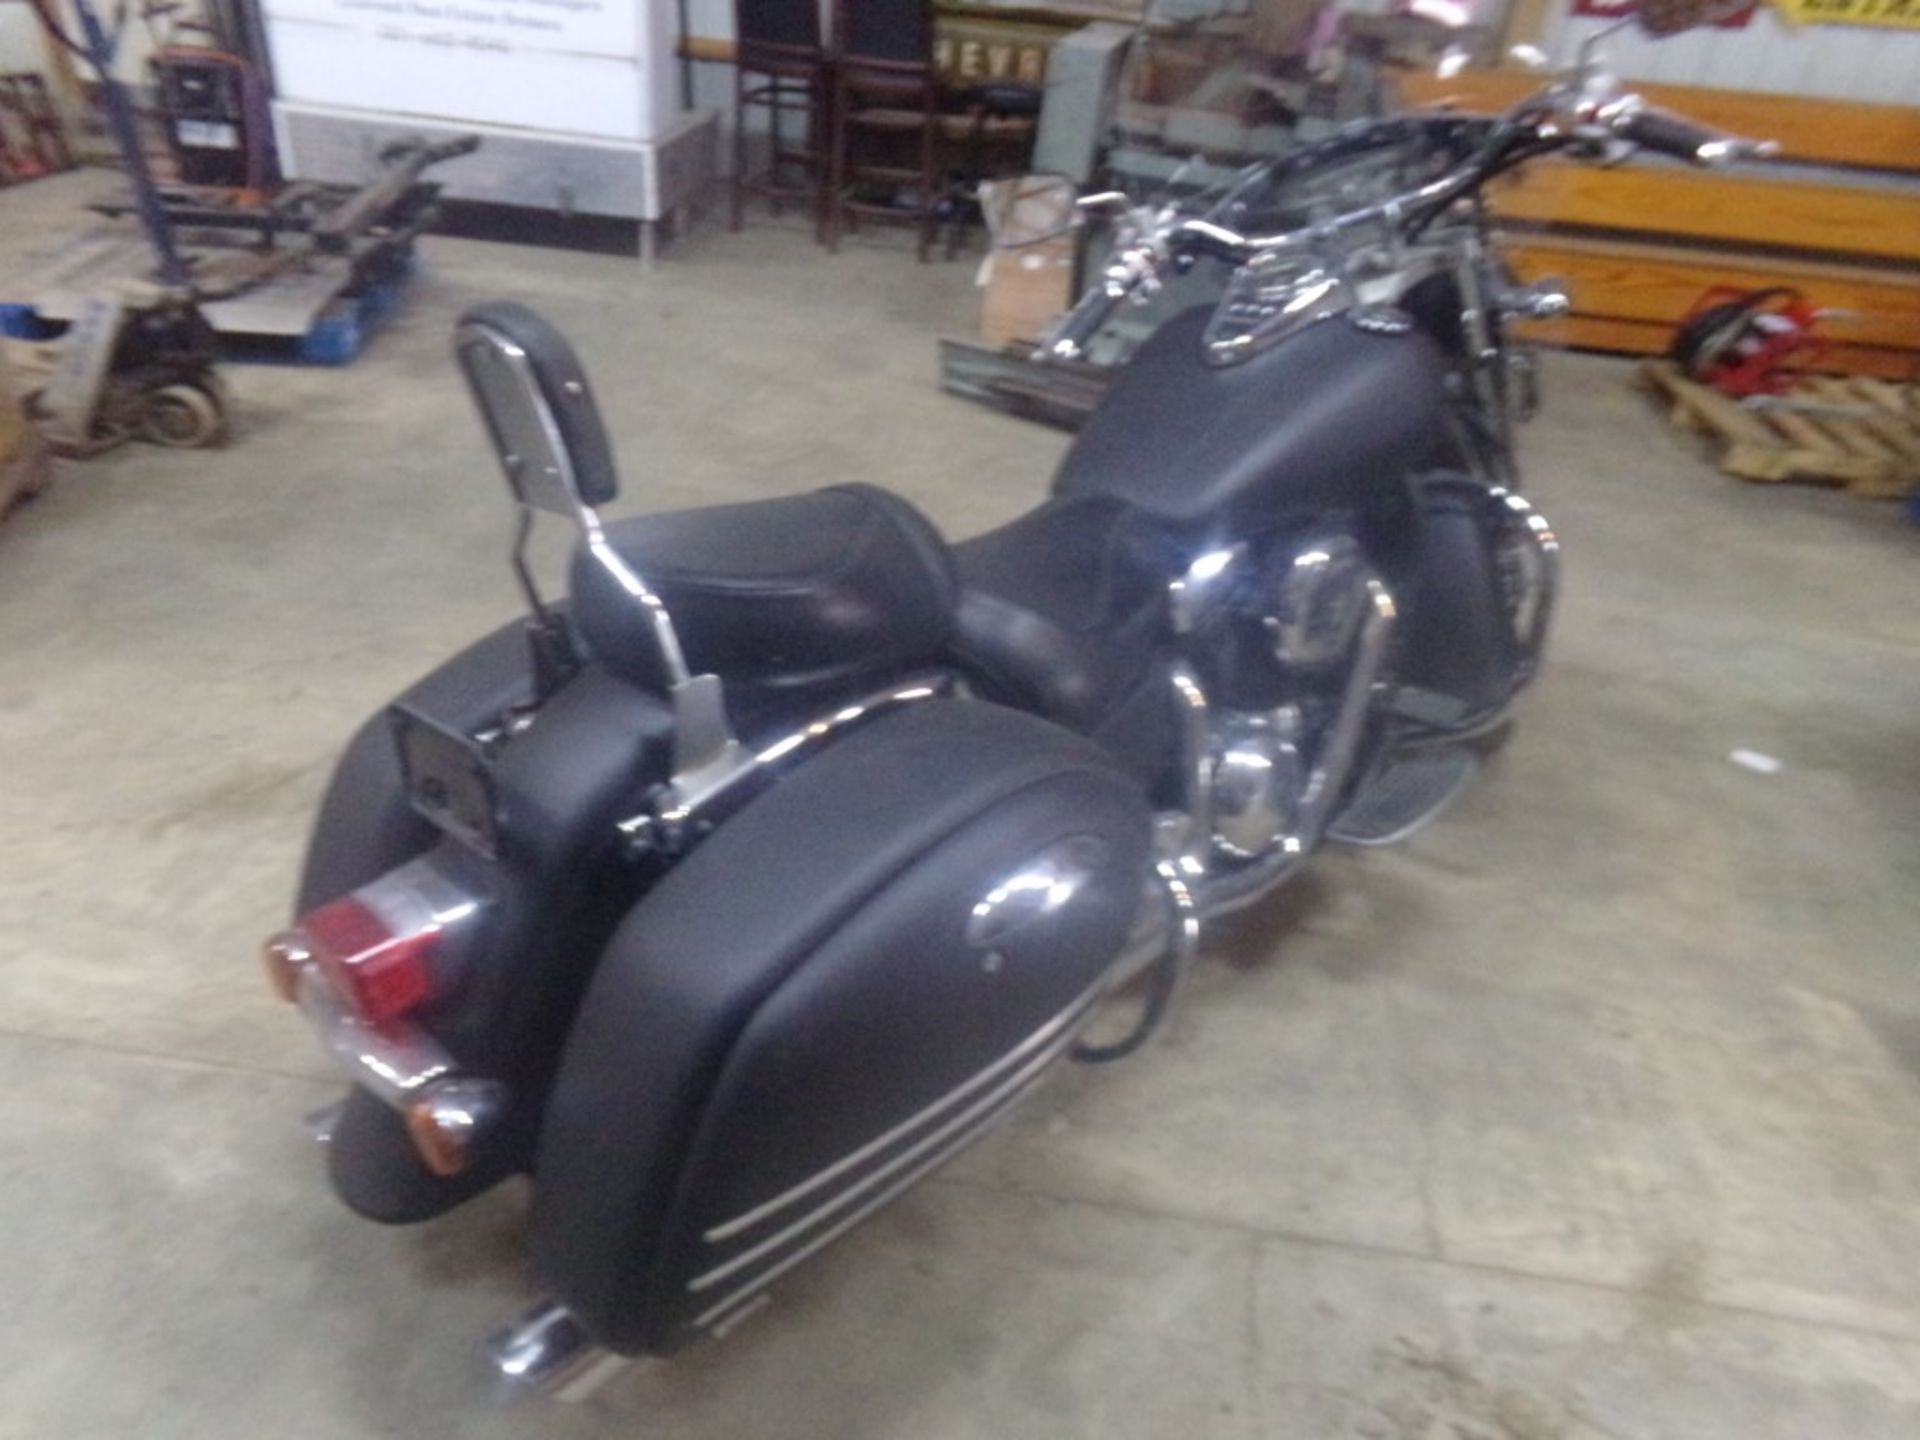 1998 Valcan Kawasaki 1500c Motorcycle w/Side Bags, Windshield, Flat Black, 19,662 Miles, VIN#: - Image 4 of 7